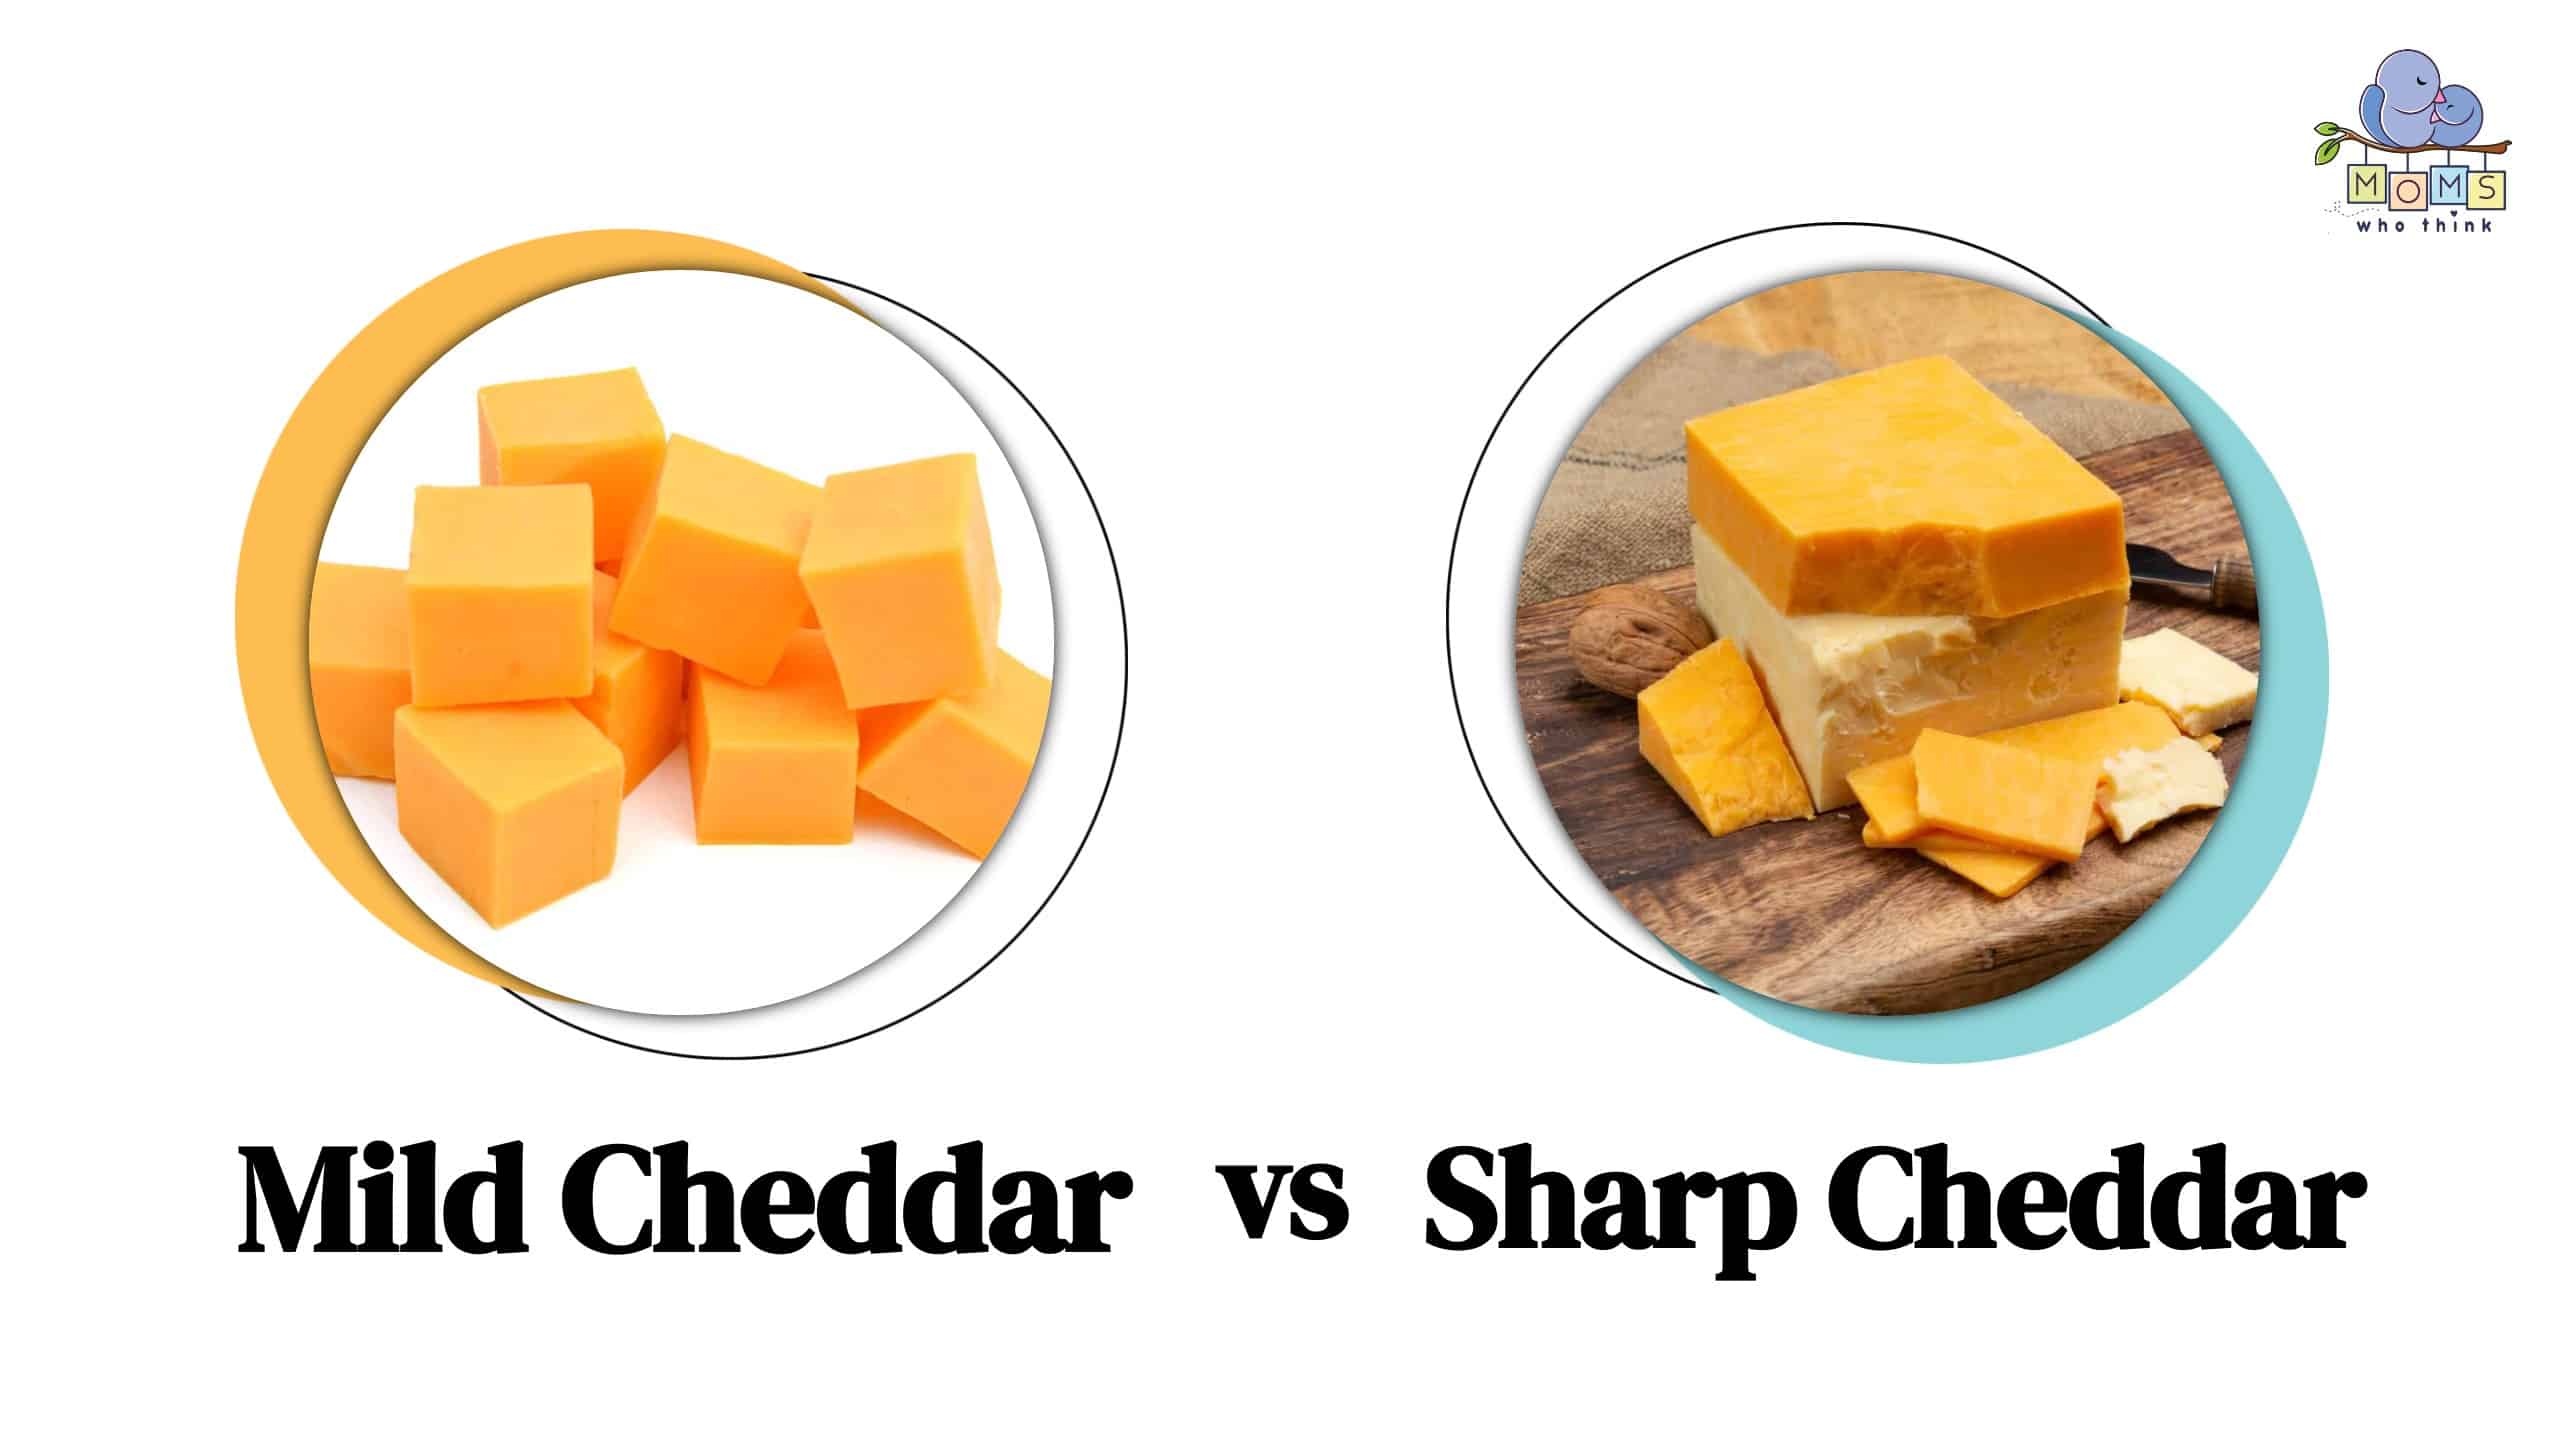 Tasting the Differences: Mild Cheddar vs. Sharp Cheddar